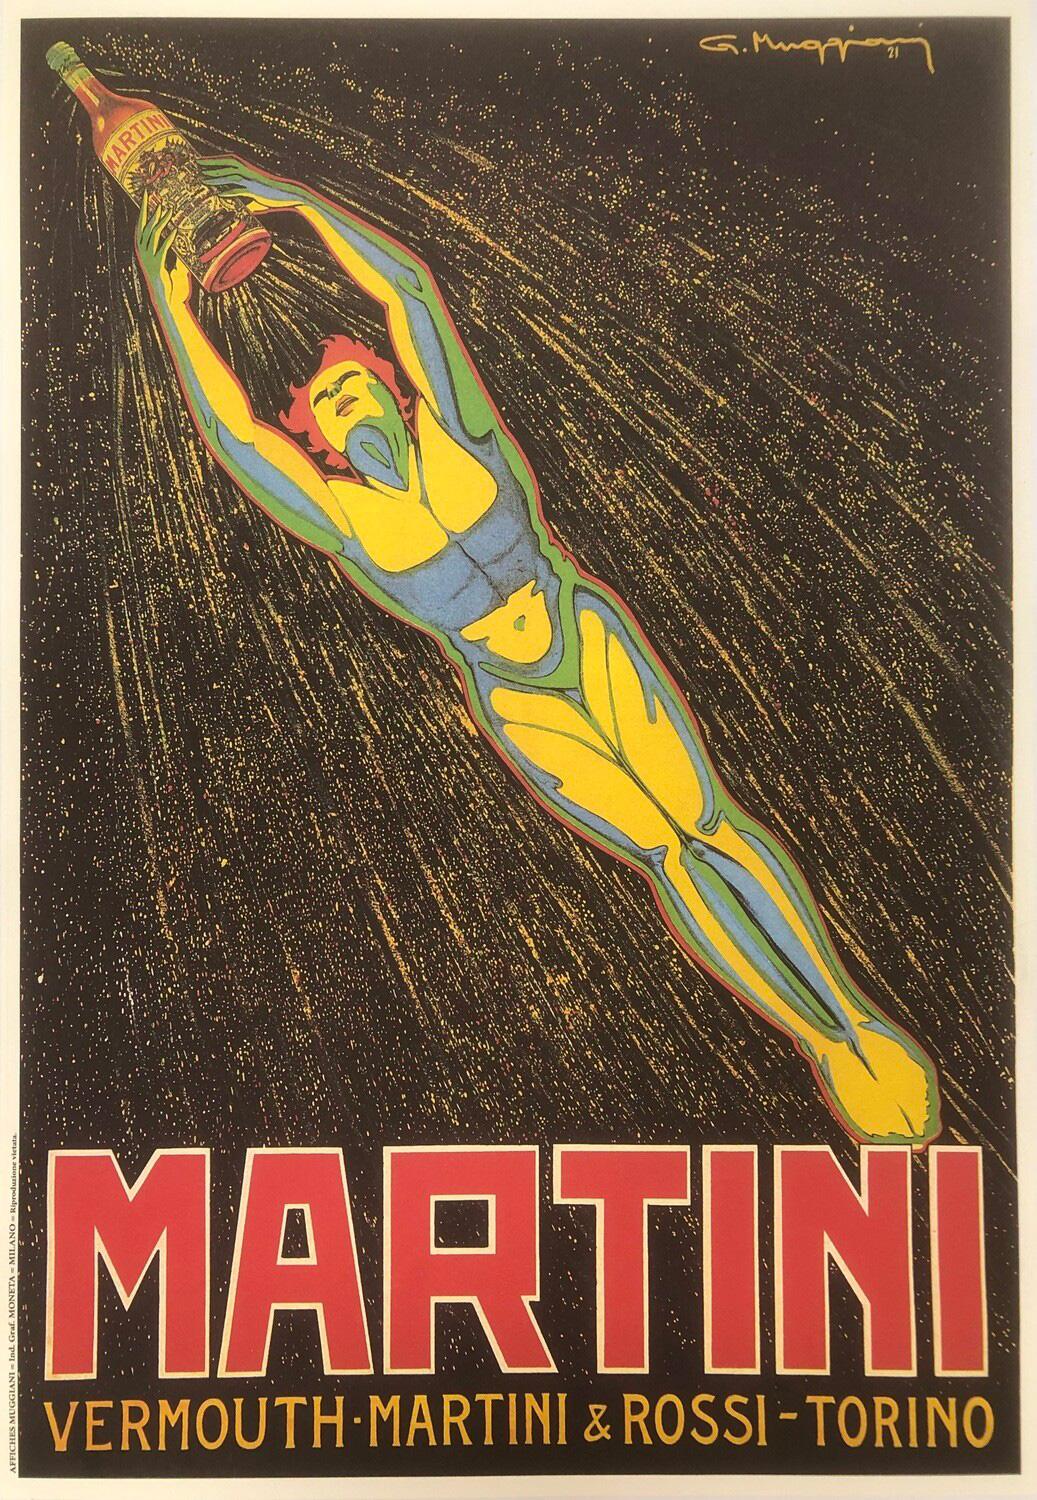 20th Century Vermouth Martini, 1980's Vintage Italian Alcohol Advertising Poster, Muggiani